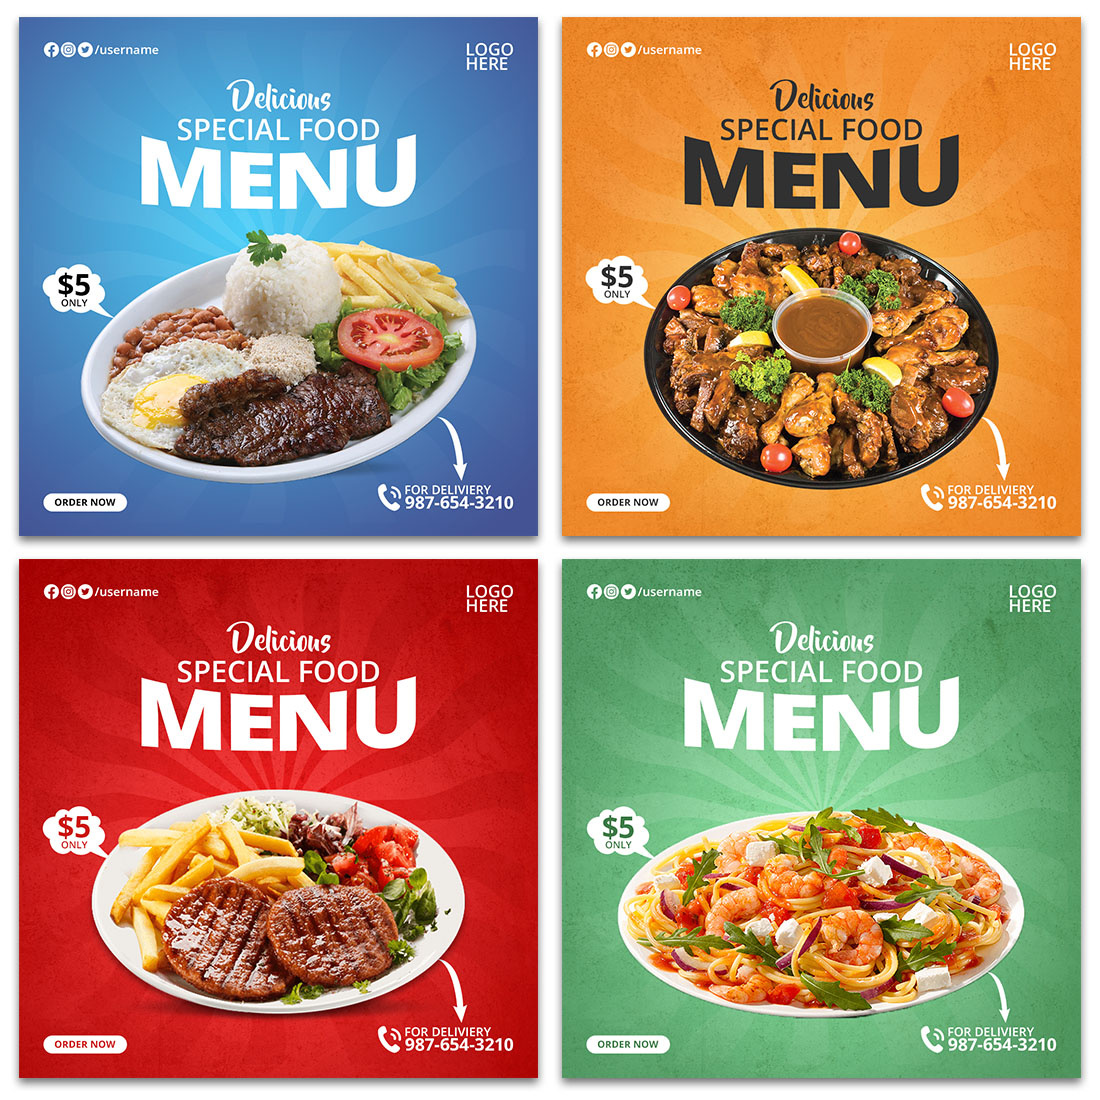 4 Special Food Menu Restaurant Social Media Banner Templates cover image.